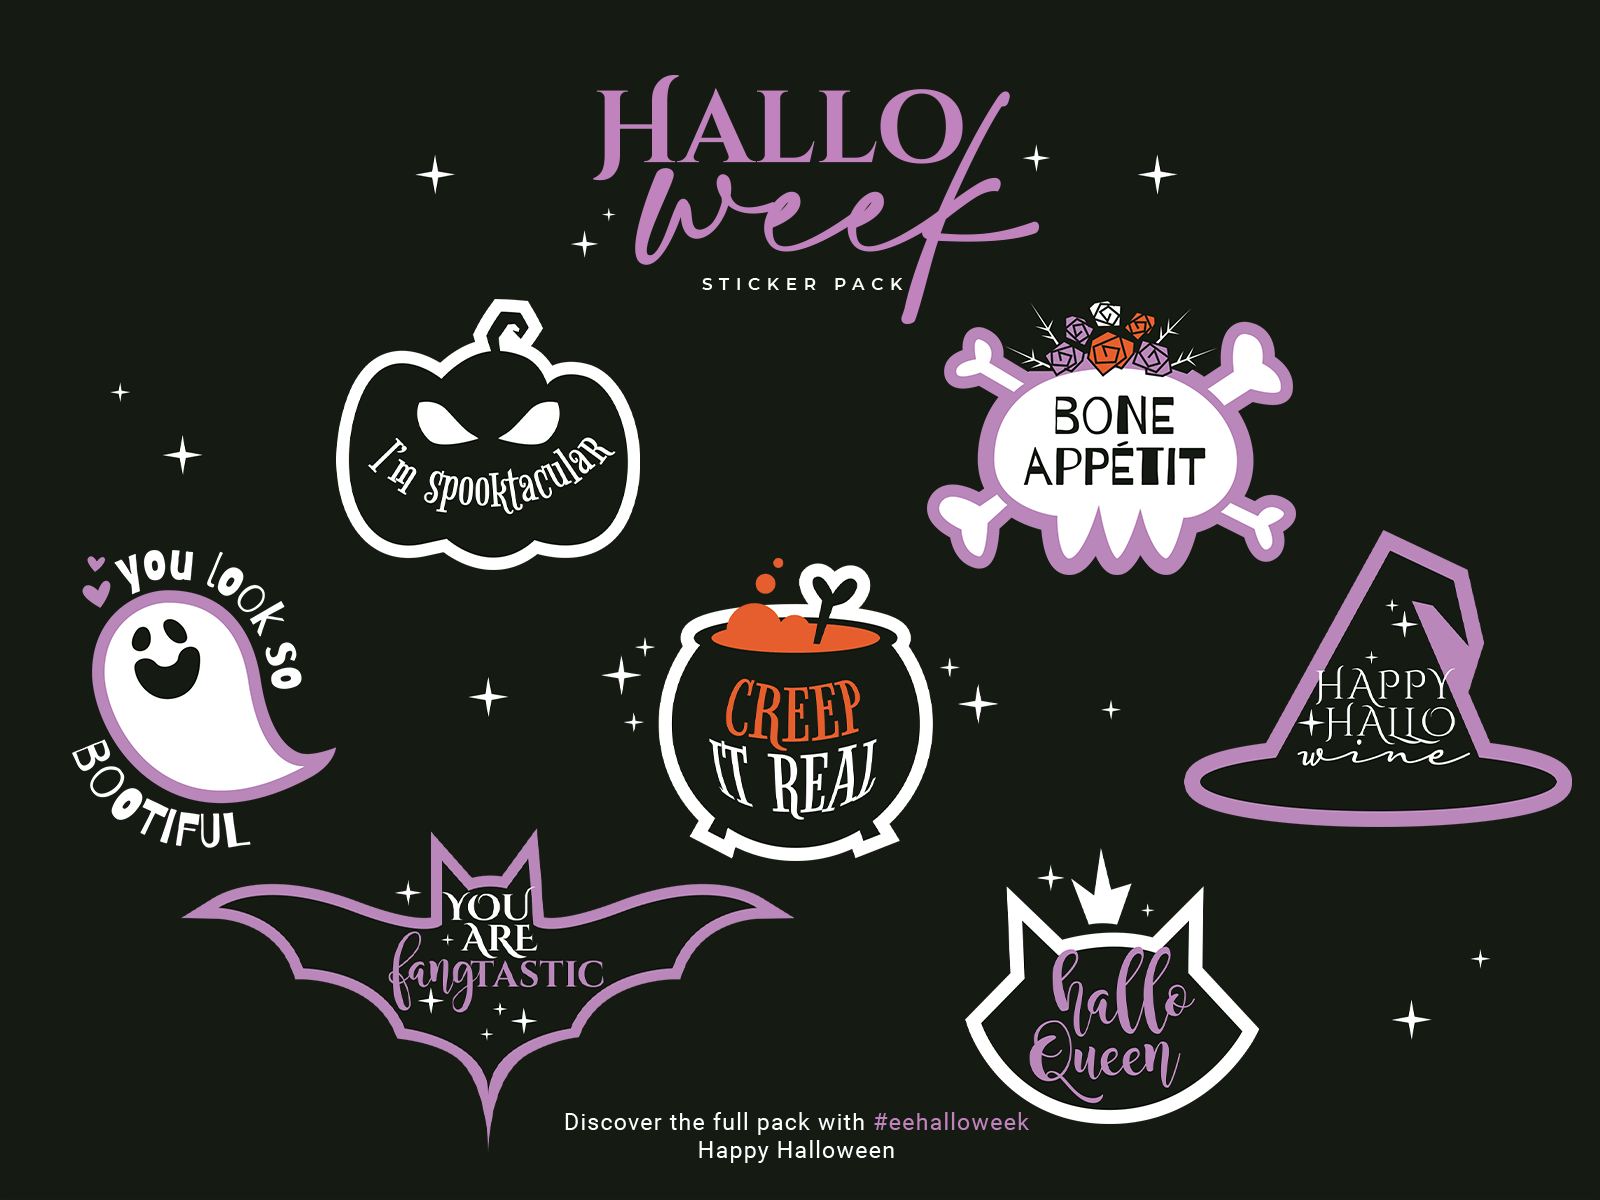 Halloweek: Halloween sticker pack 2021